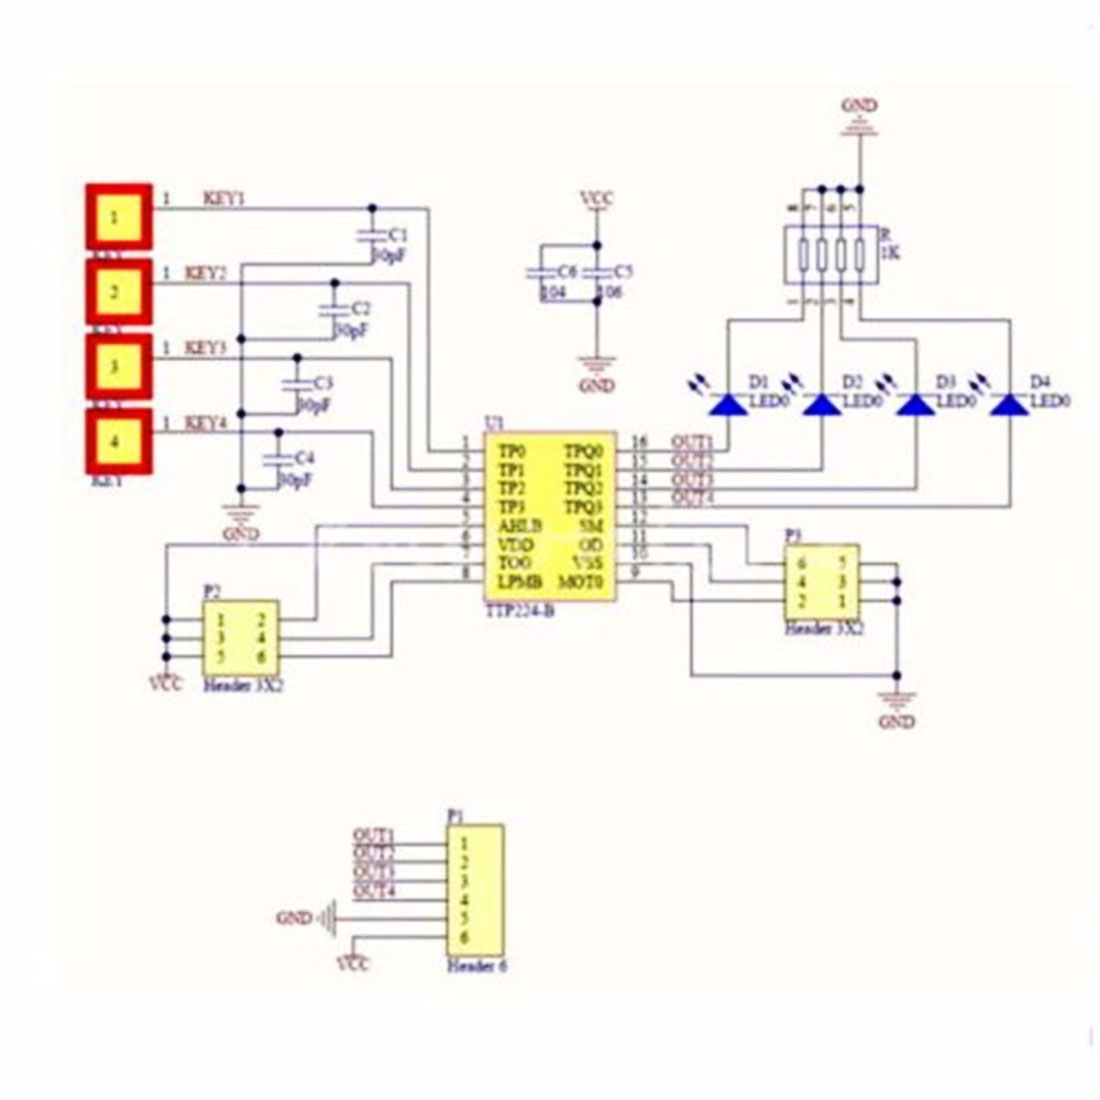 https://www.elecbee.com/image/catalog/Smart-Module/Geekcreitreg-12V-4CH-Channel-433Mhz-Wireless-Remote-Control-Switch-With-2-Transmitter-1012323-descriptionImage0.jpeg